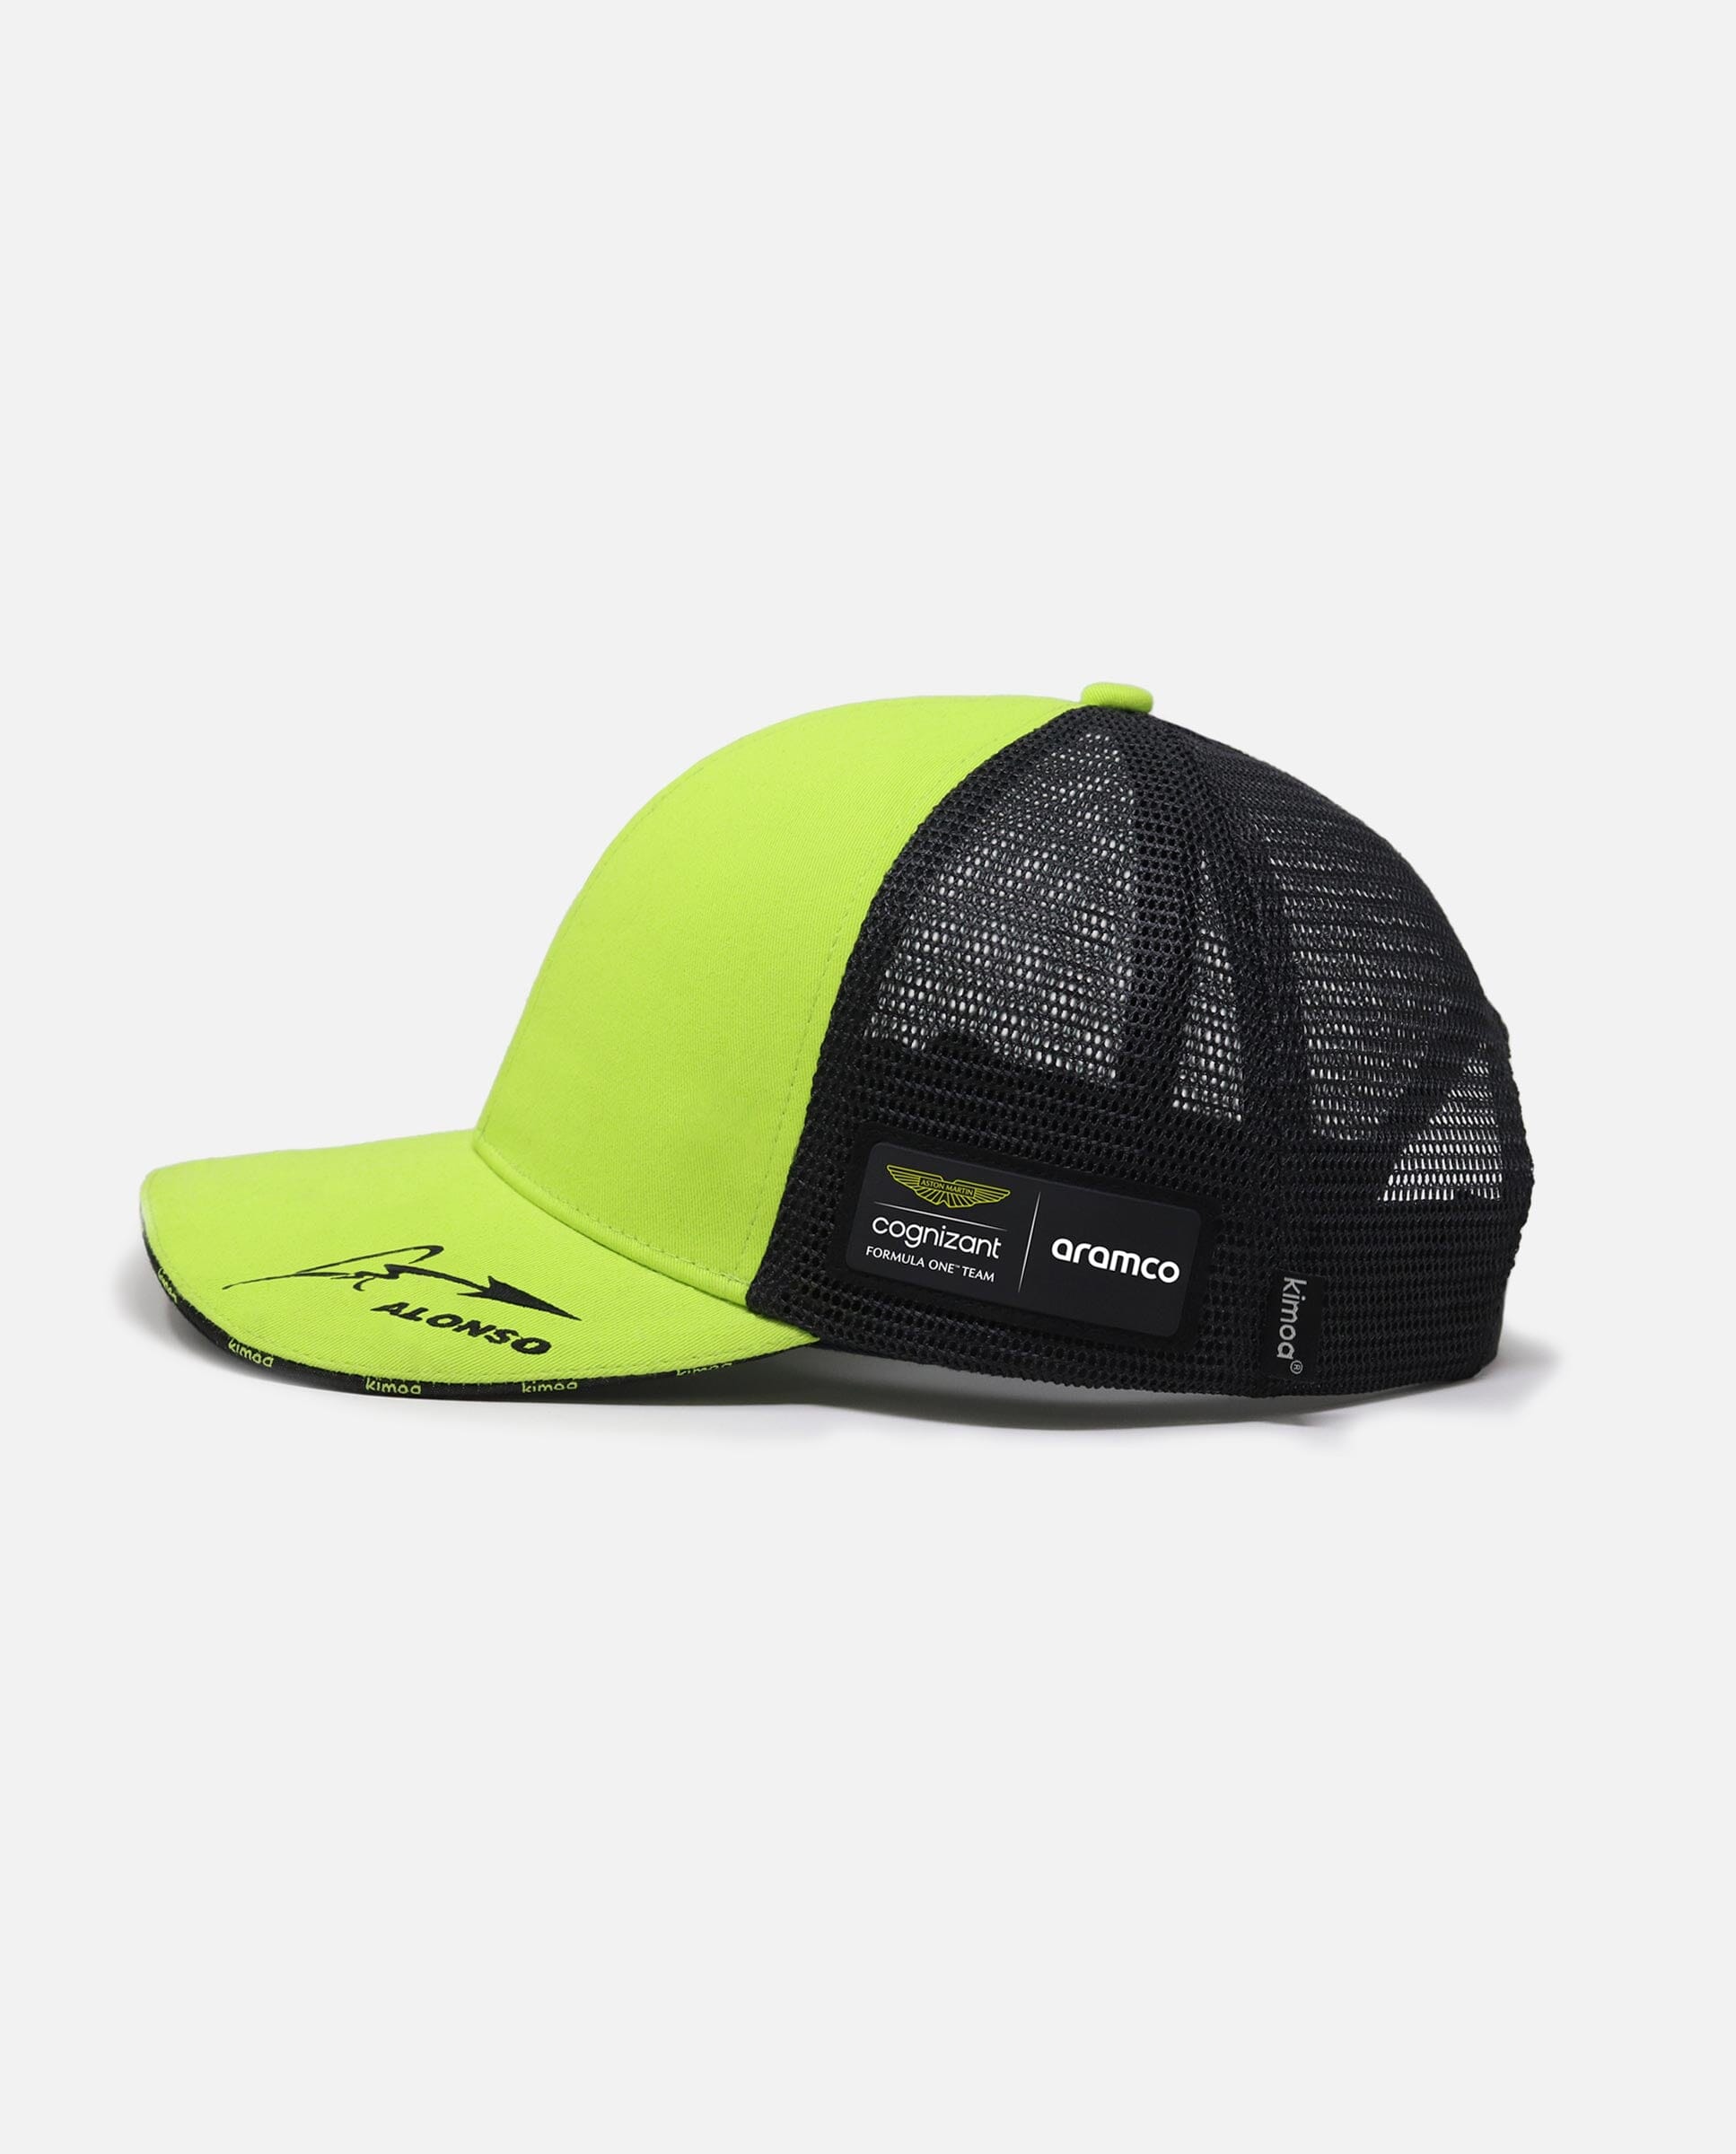 Aston Martin F1 Kimoa Fernando Alonso Lifestyle Hat- Lime